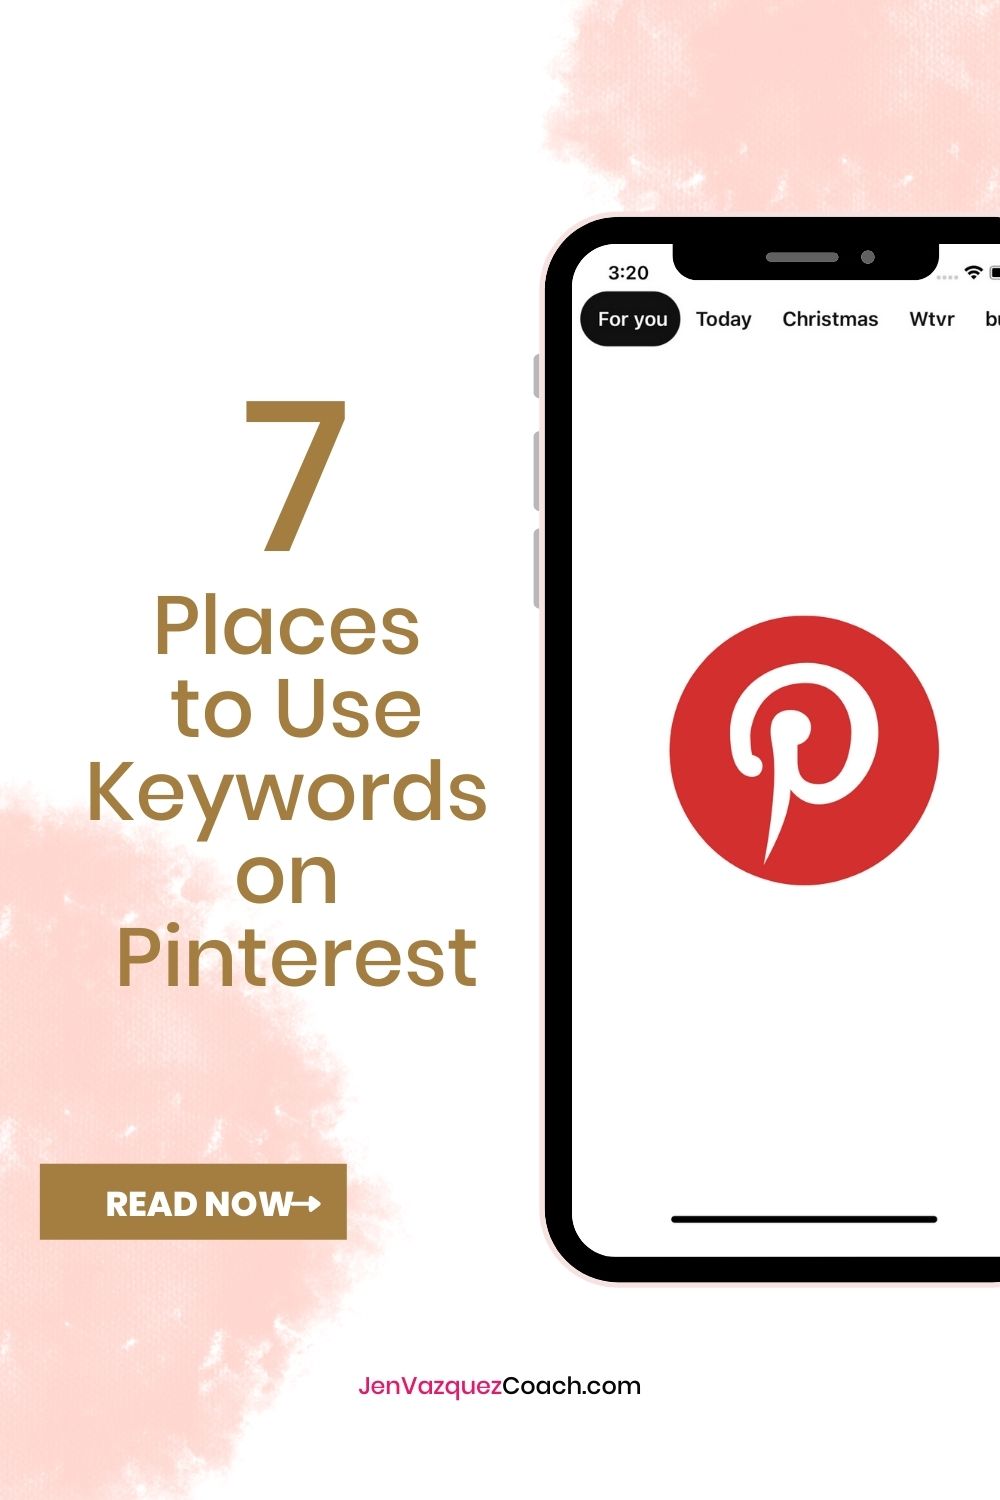 7 places to use keywords on Pinterest by Jen Vazquez Pinterest Strategist